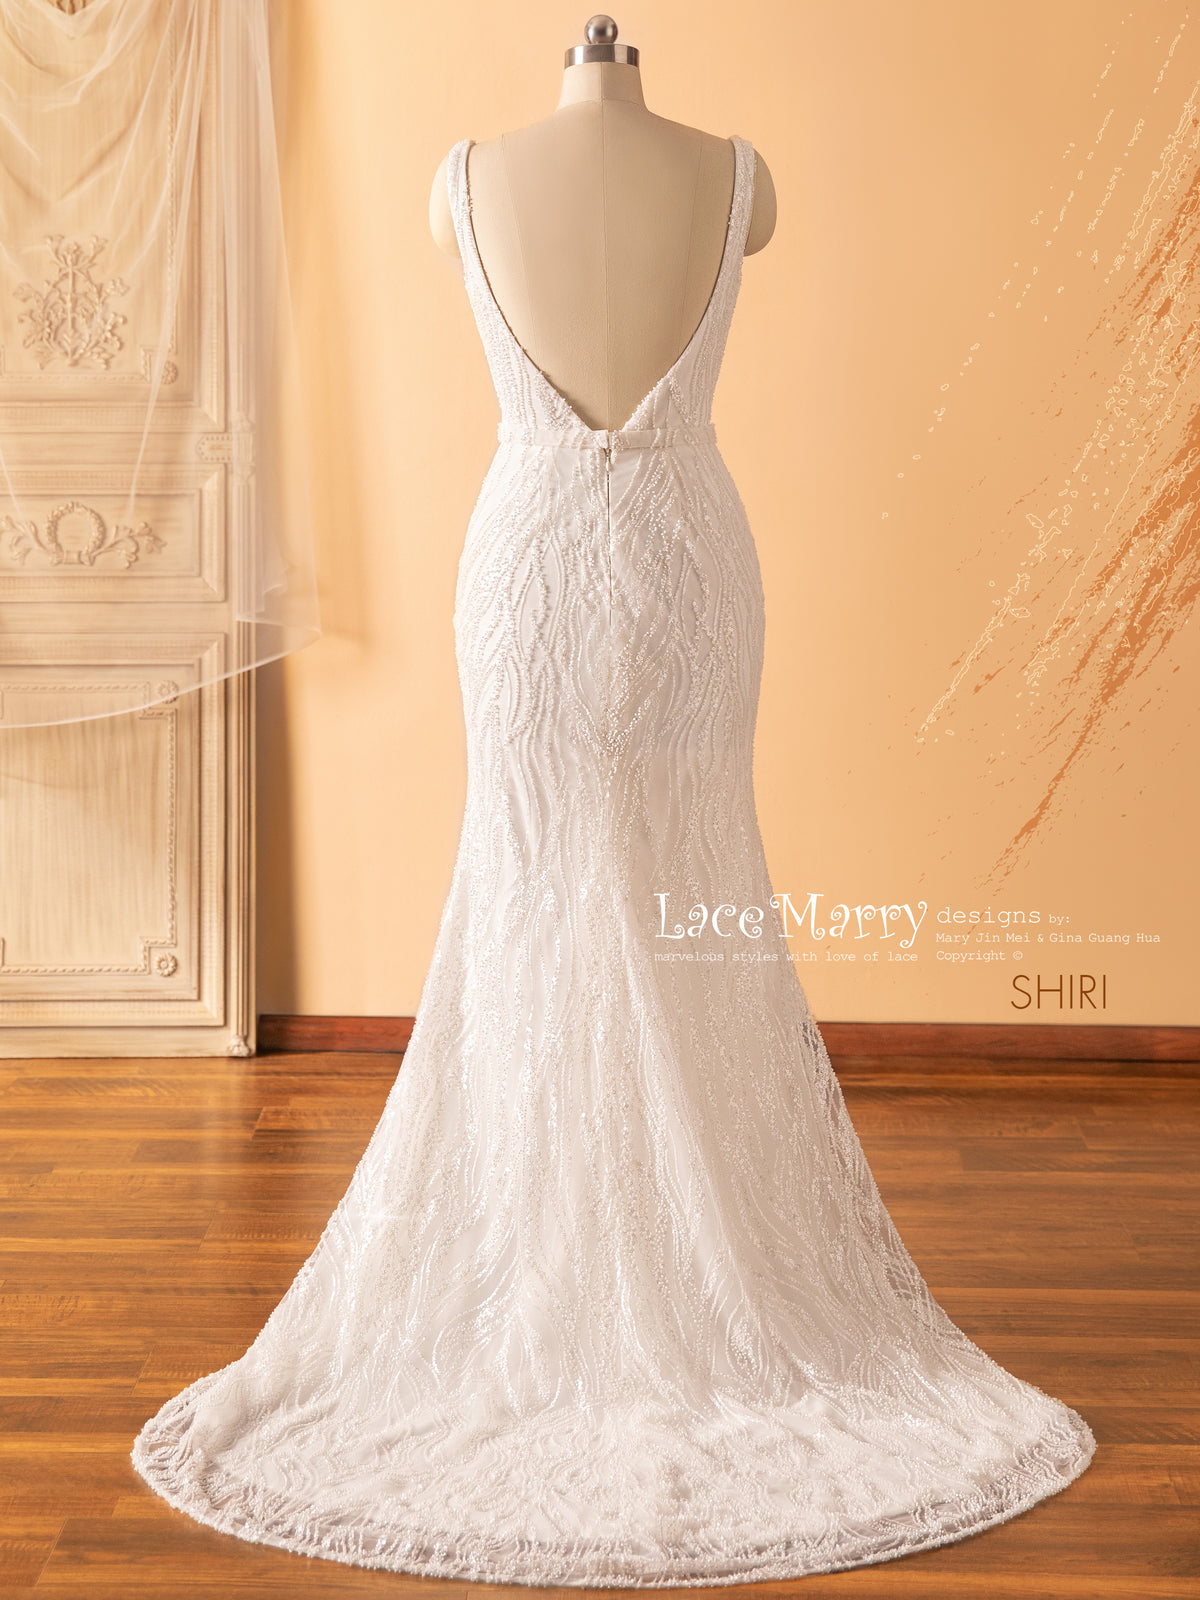 SHIRI / Square Neck Wedding Dress with Separate Cape